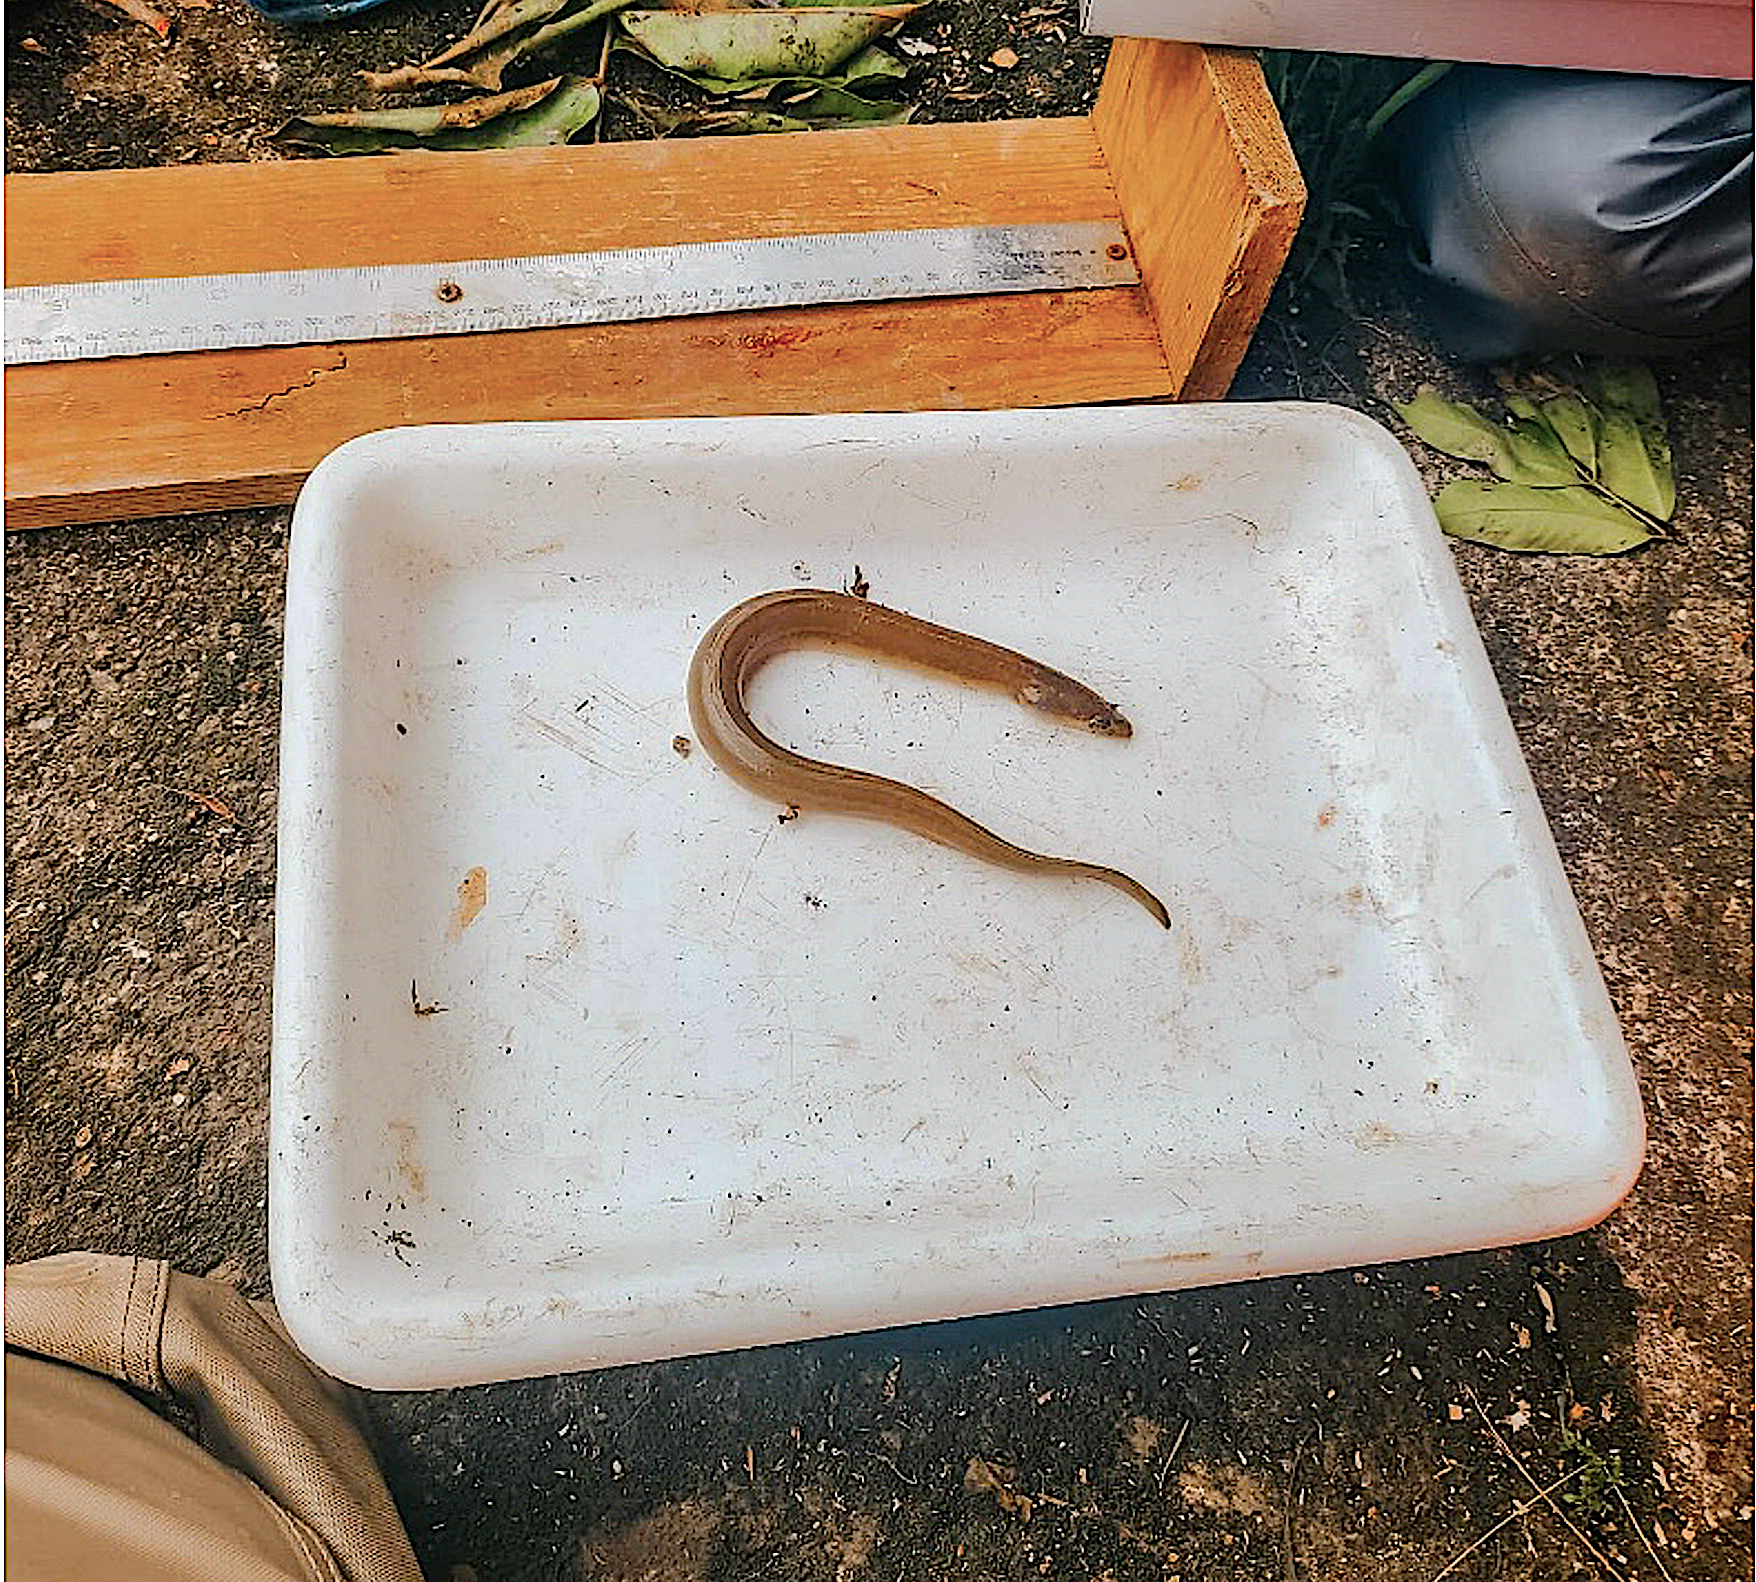 image: American eel in a plastic basin.